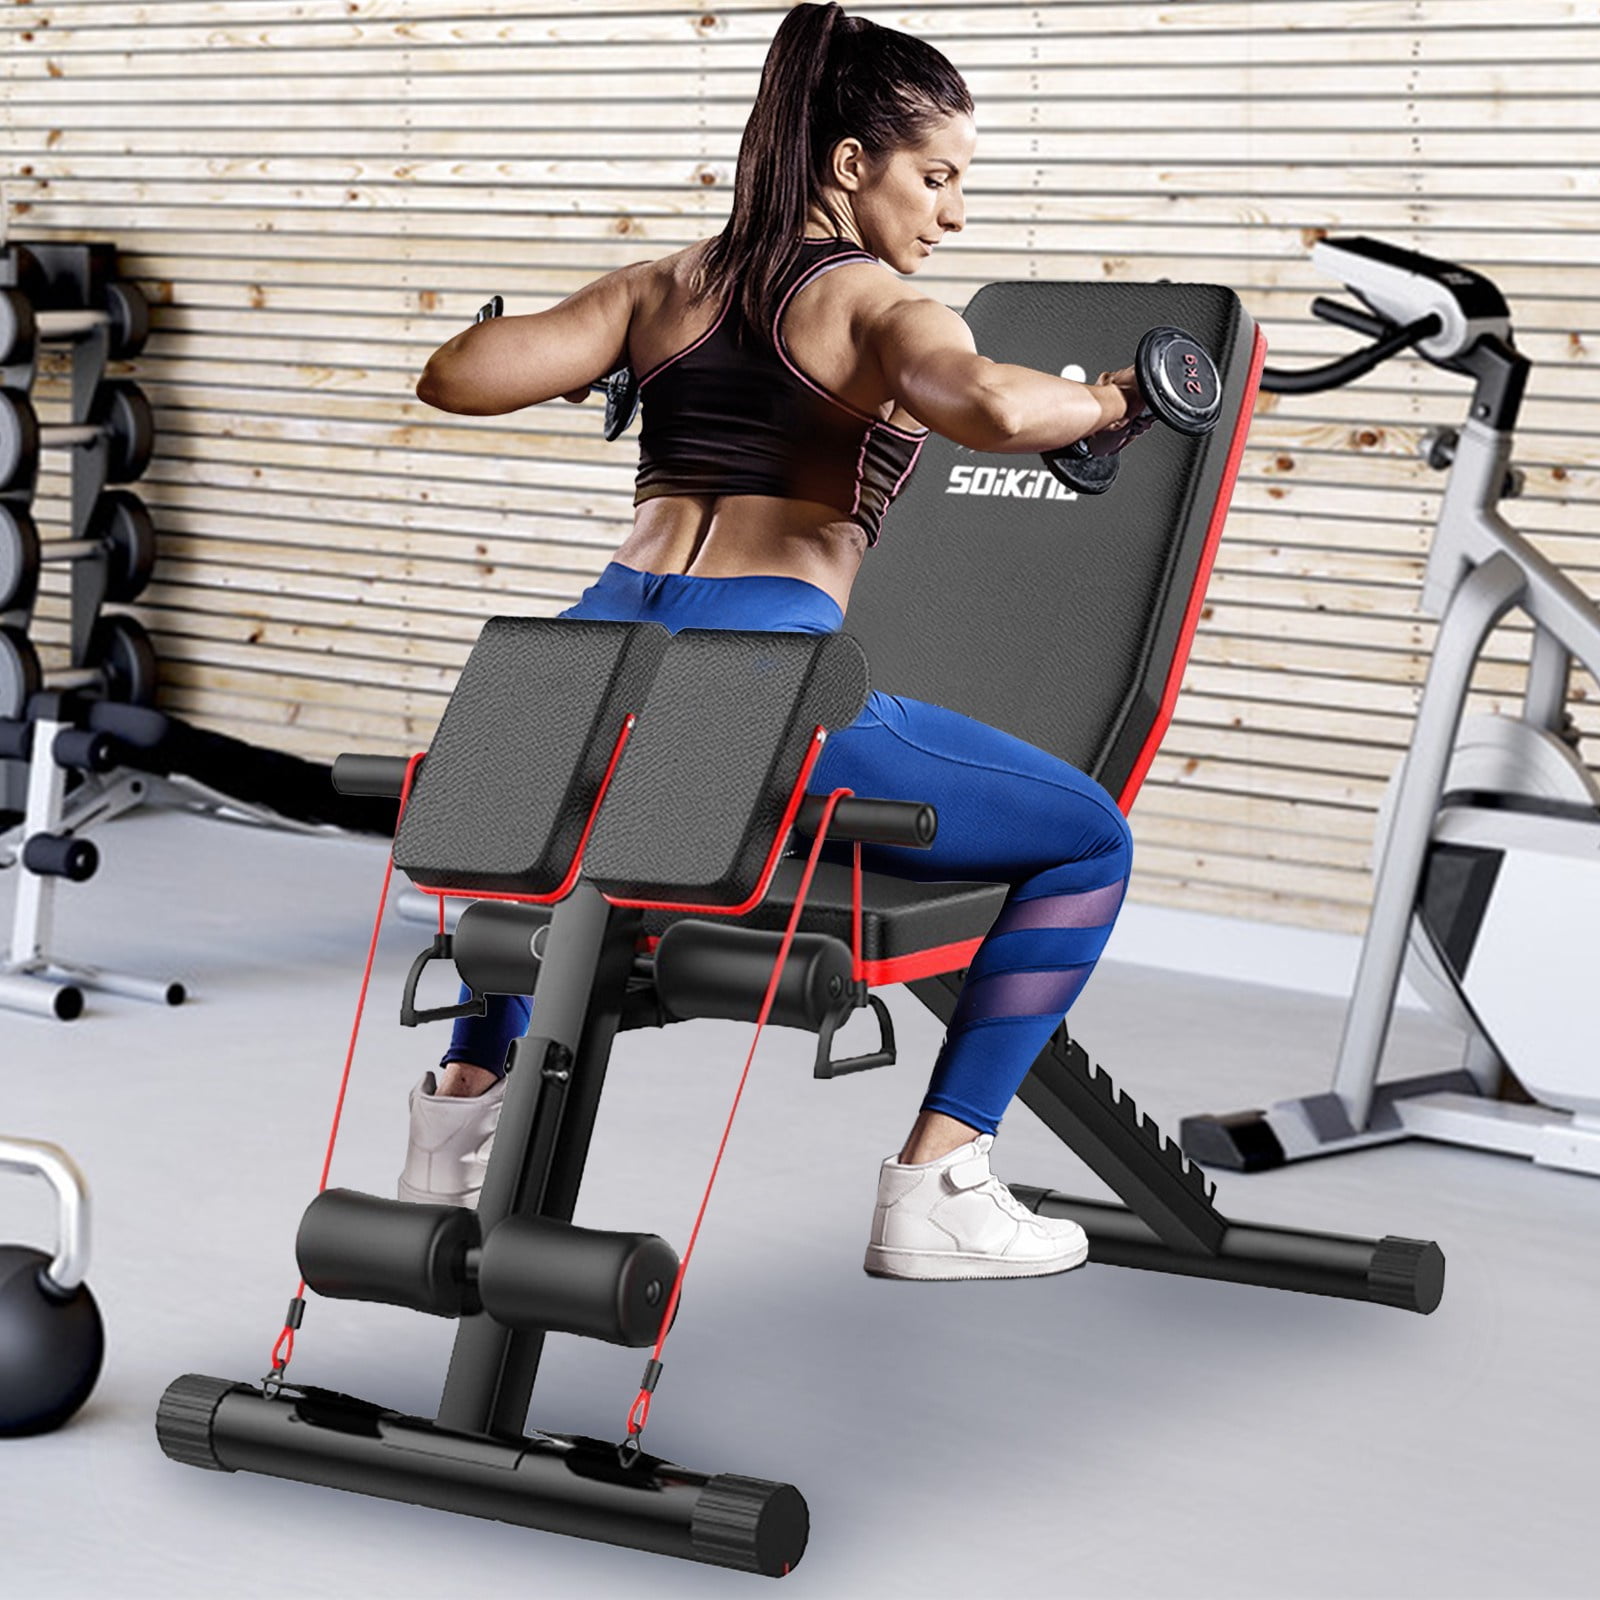 Workout Dumbbell Bench Full-Body Strength Training Exercise Equipment Adjustable 